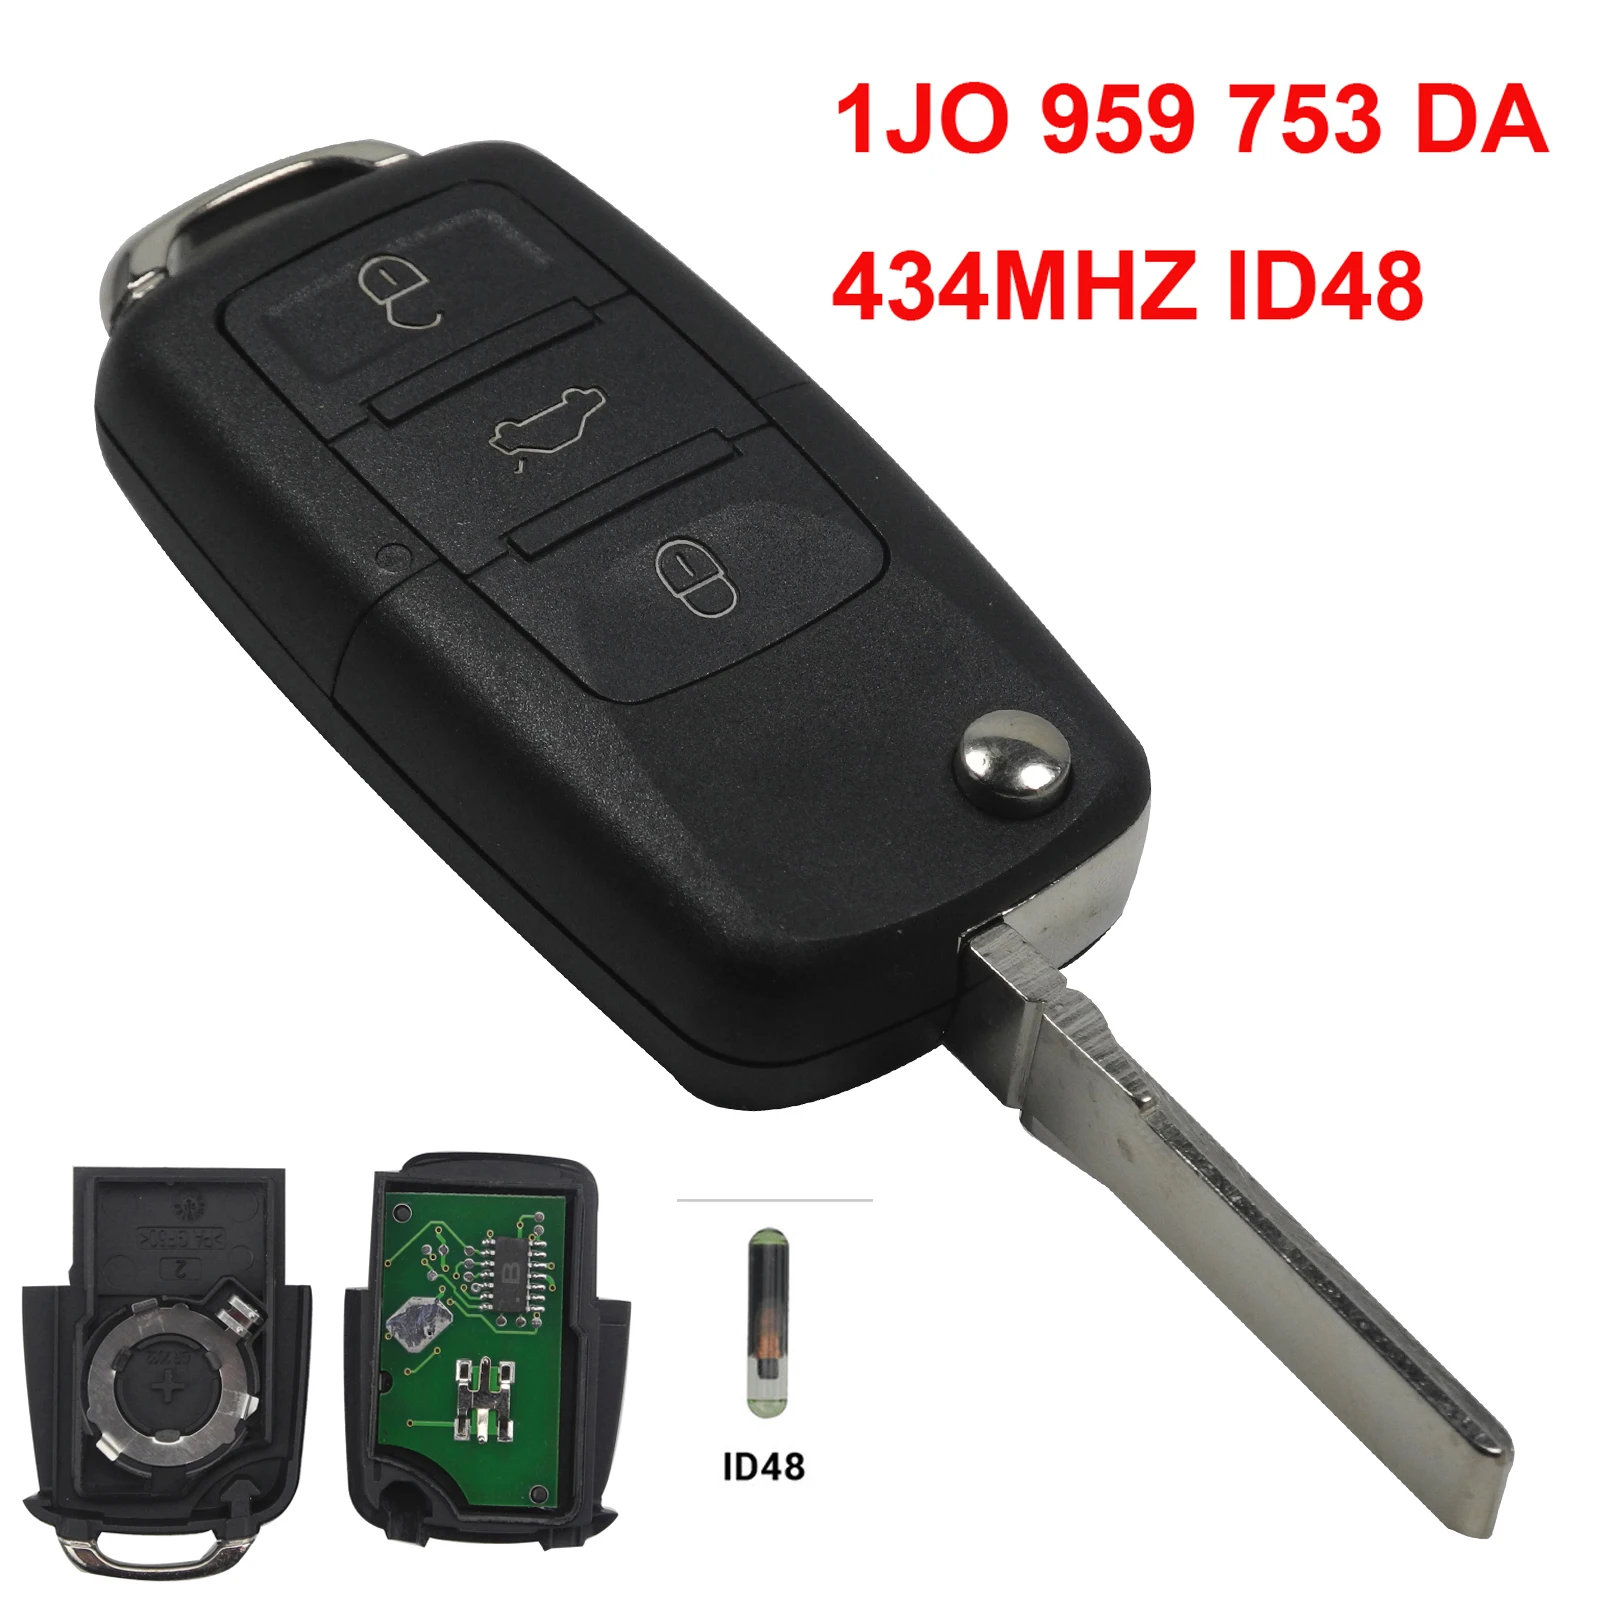 Jingyuqin флип-ключ для VW Volkswagen Golf Passat Polo Jetta Touran Bora Sharan ASK 5FA009263-10 1K0959753G 433 МГц ID48 - Количество кнопок: 1J0959753DA